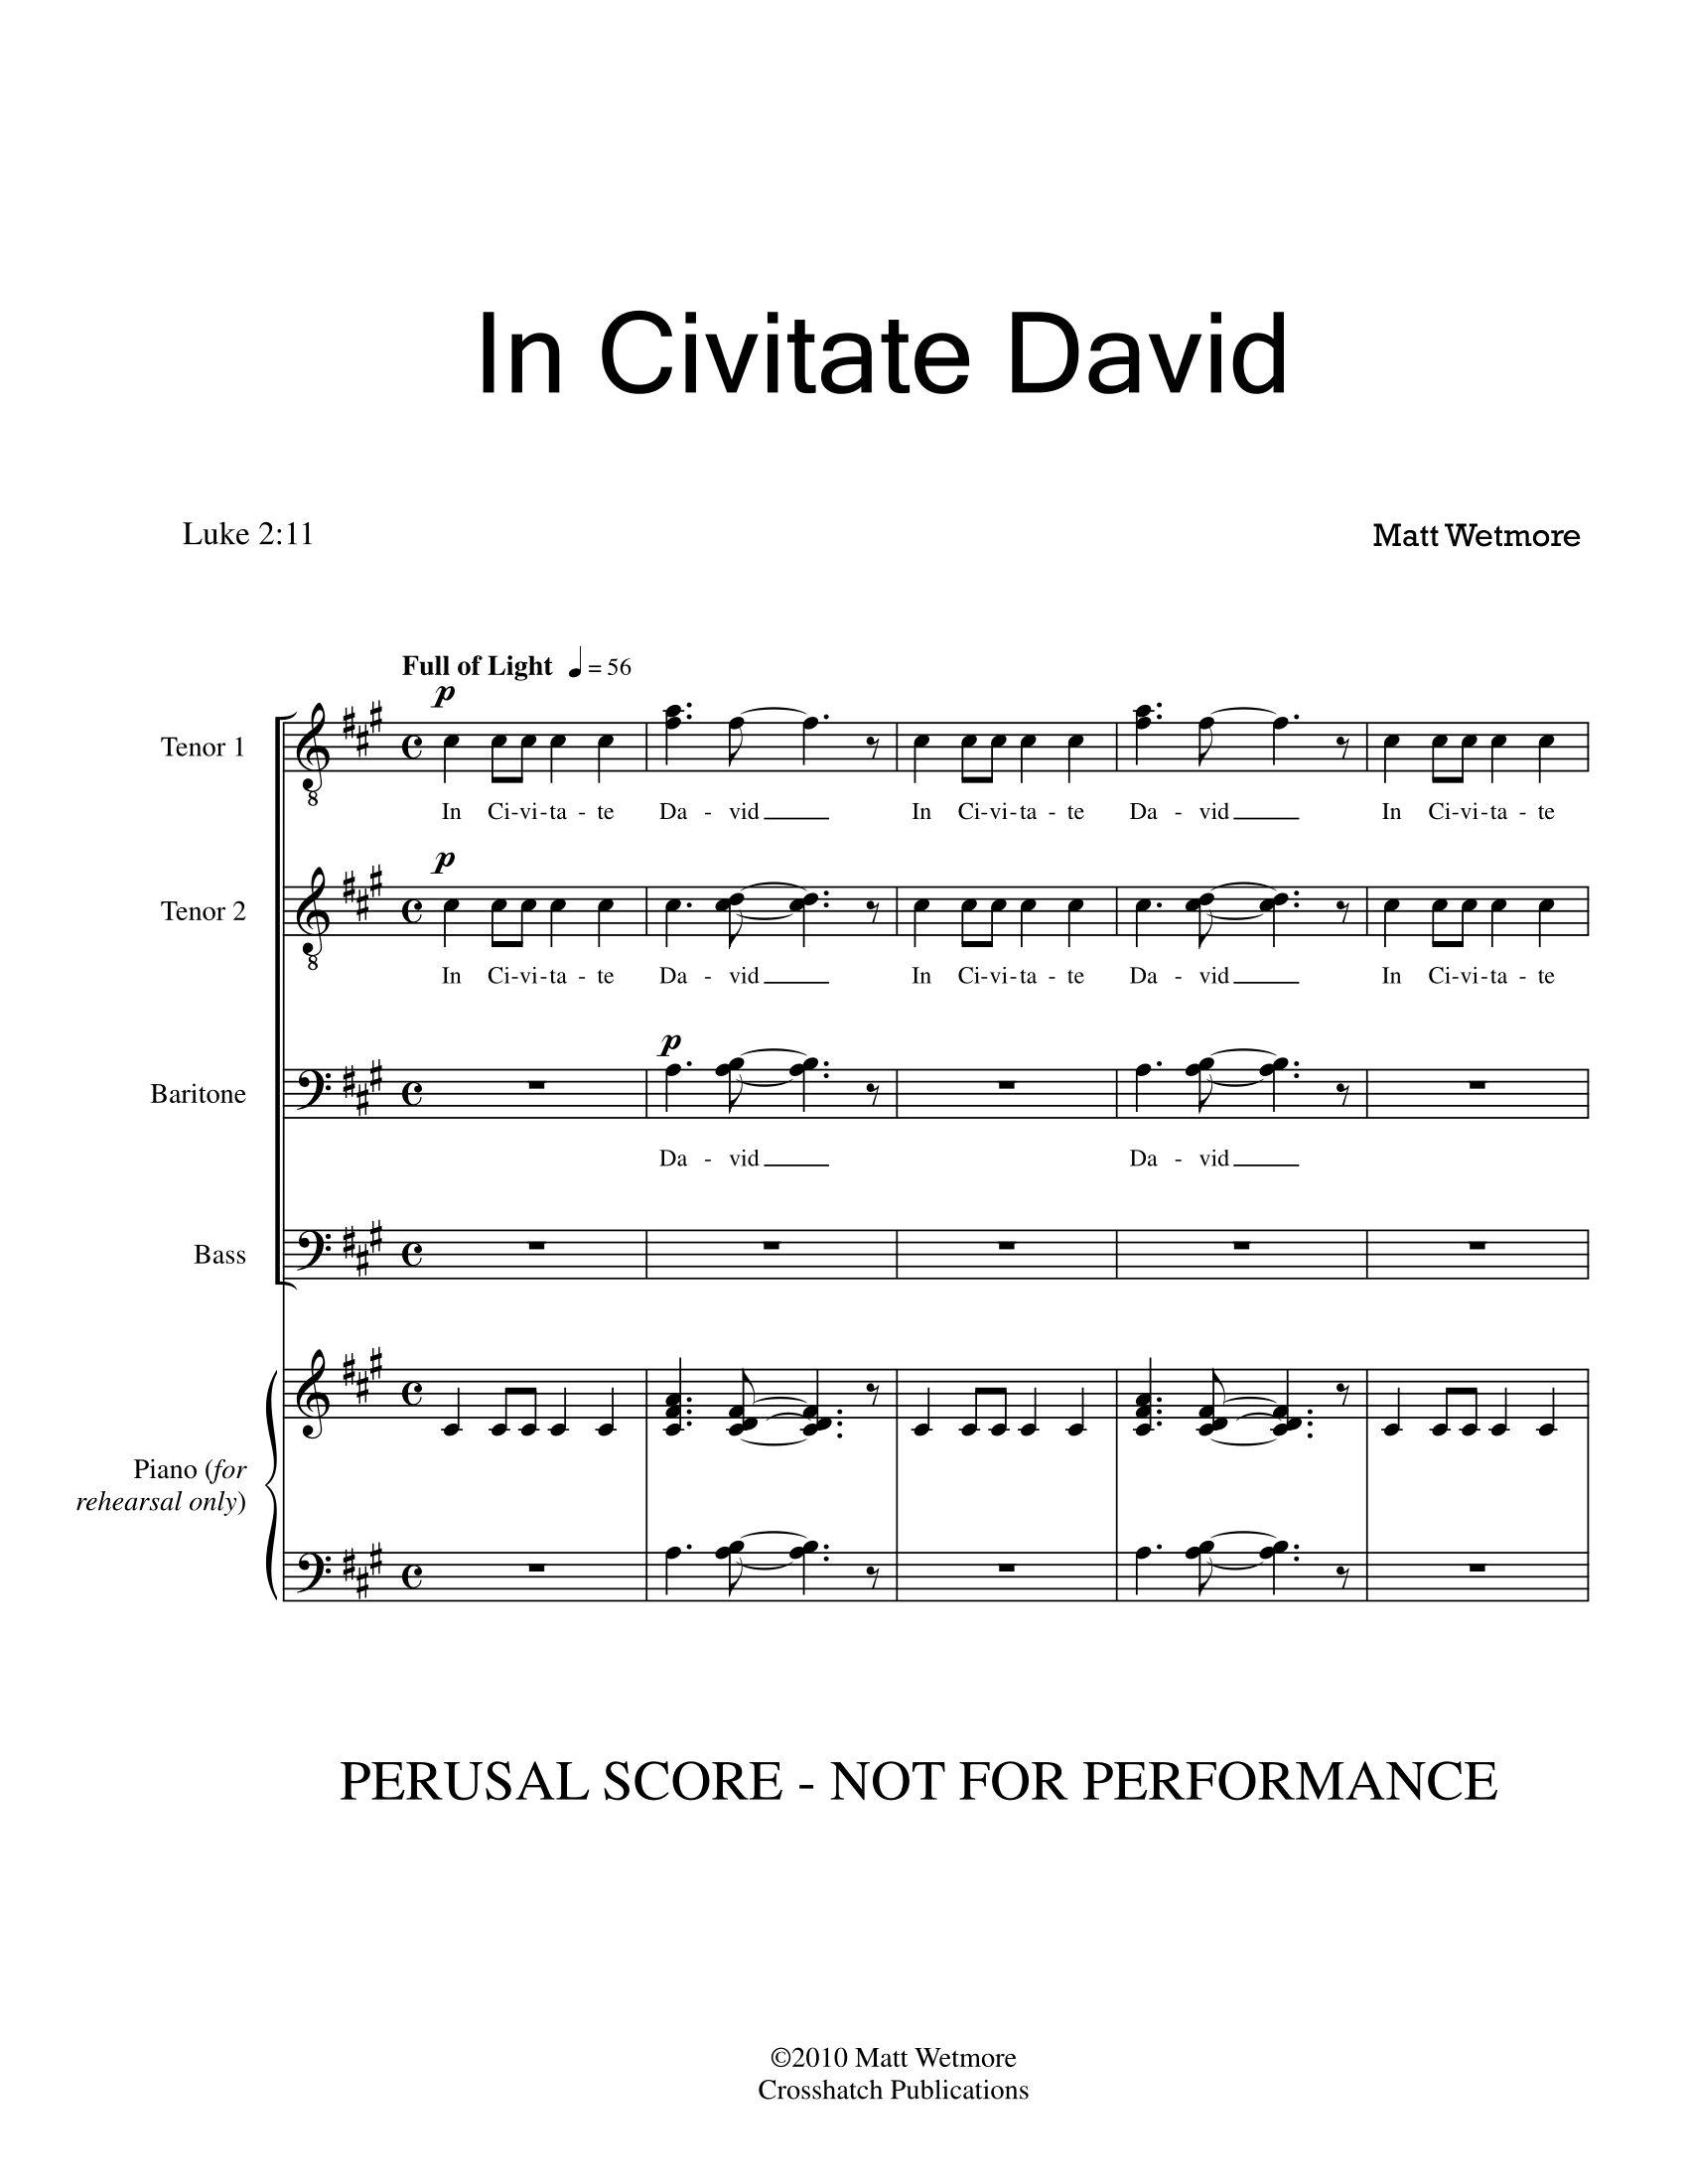 In Civitate David Perusal-3.png